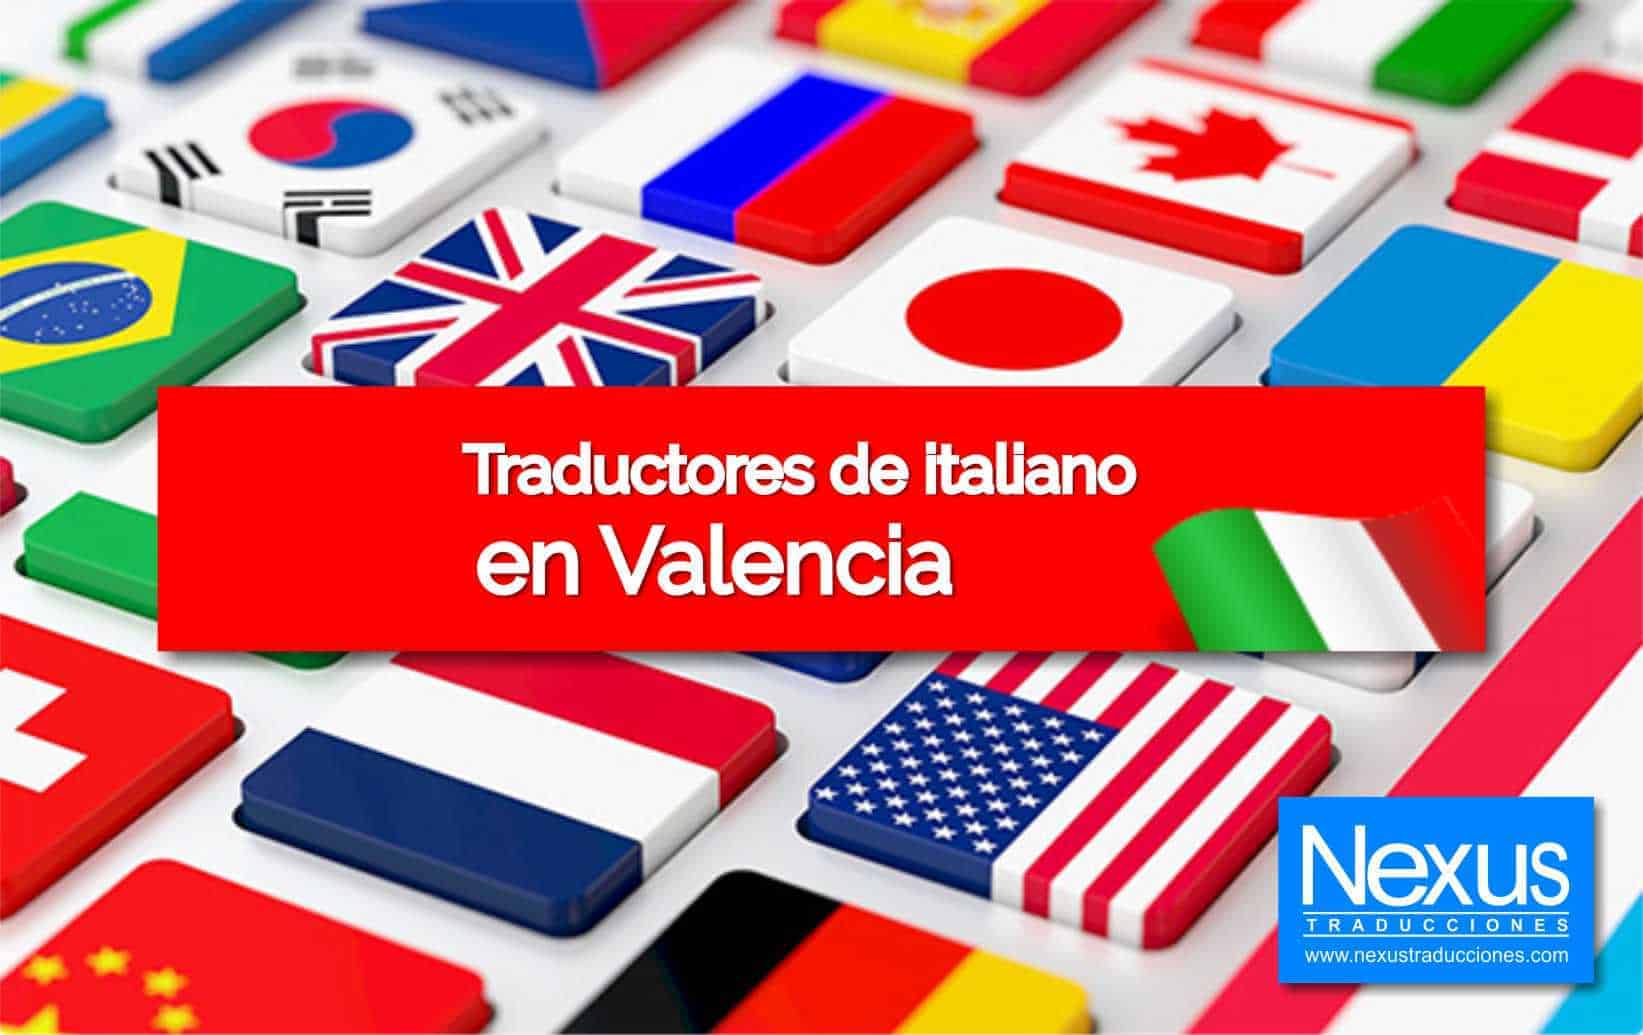 Italian translations in Valencia